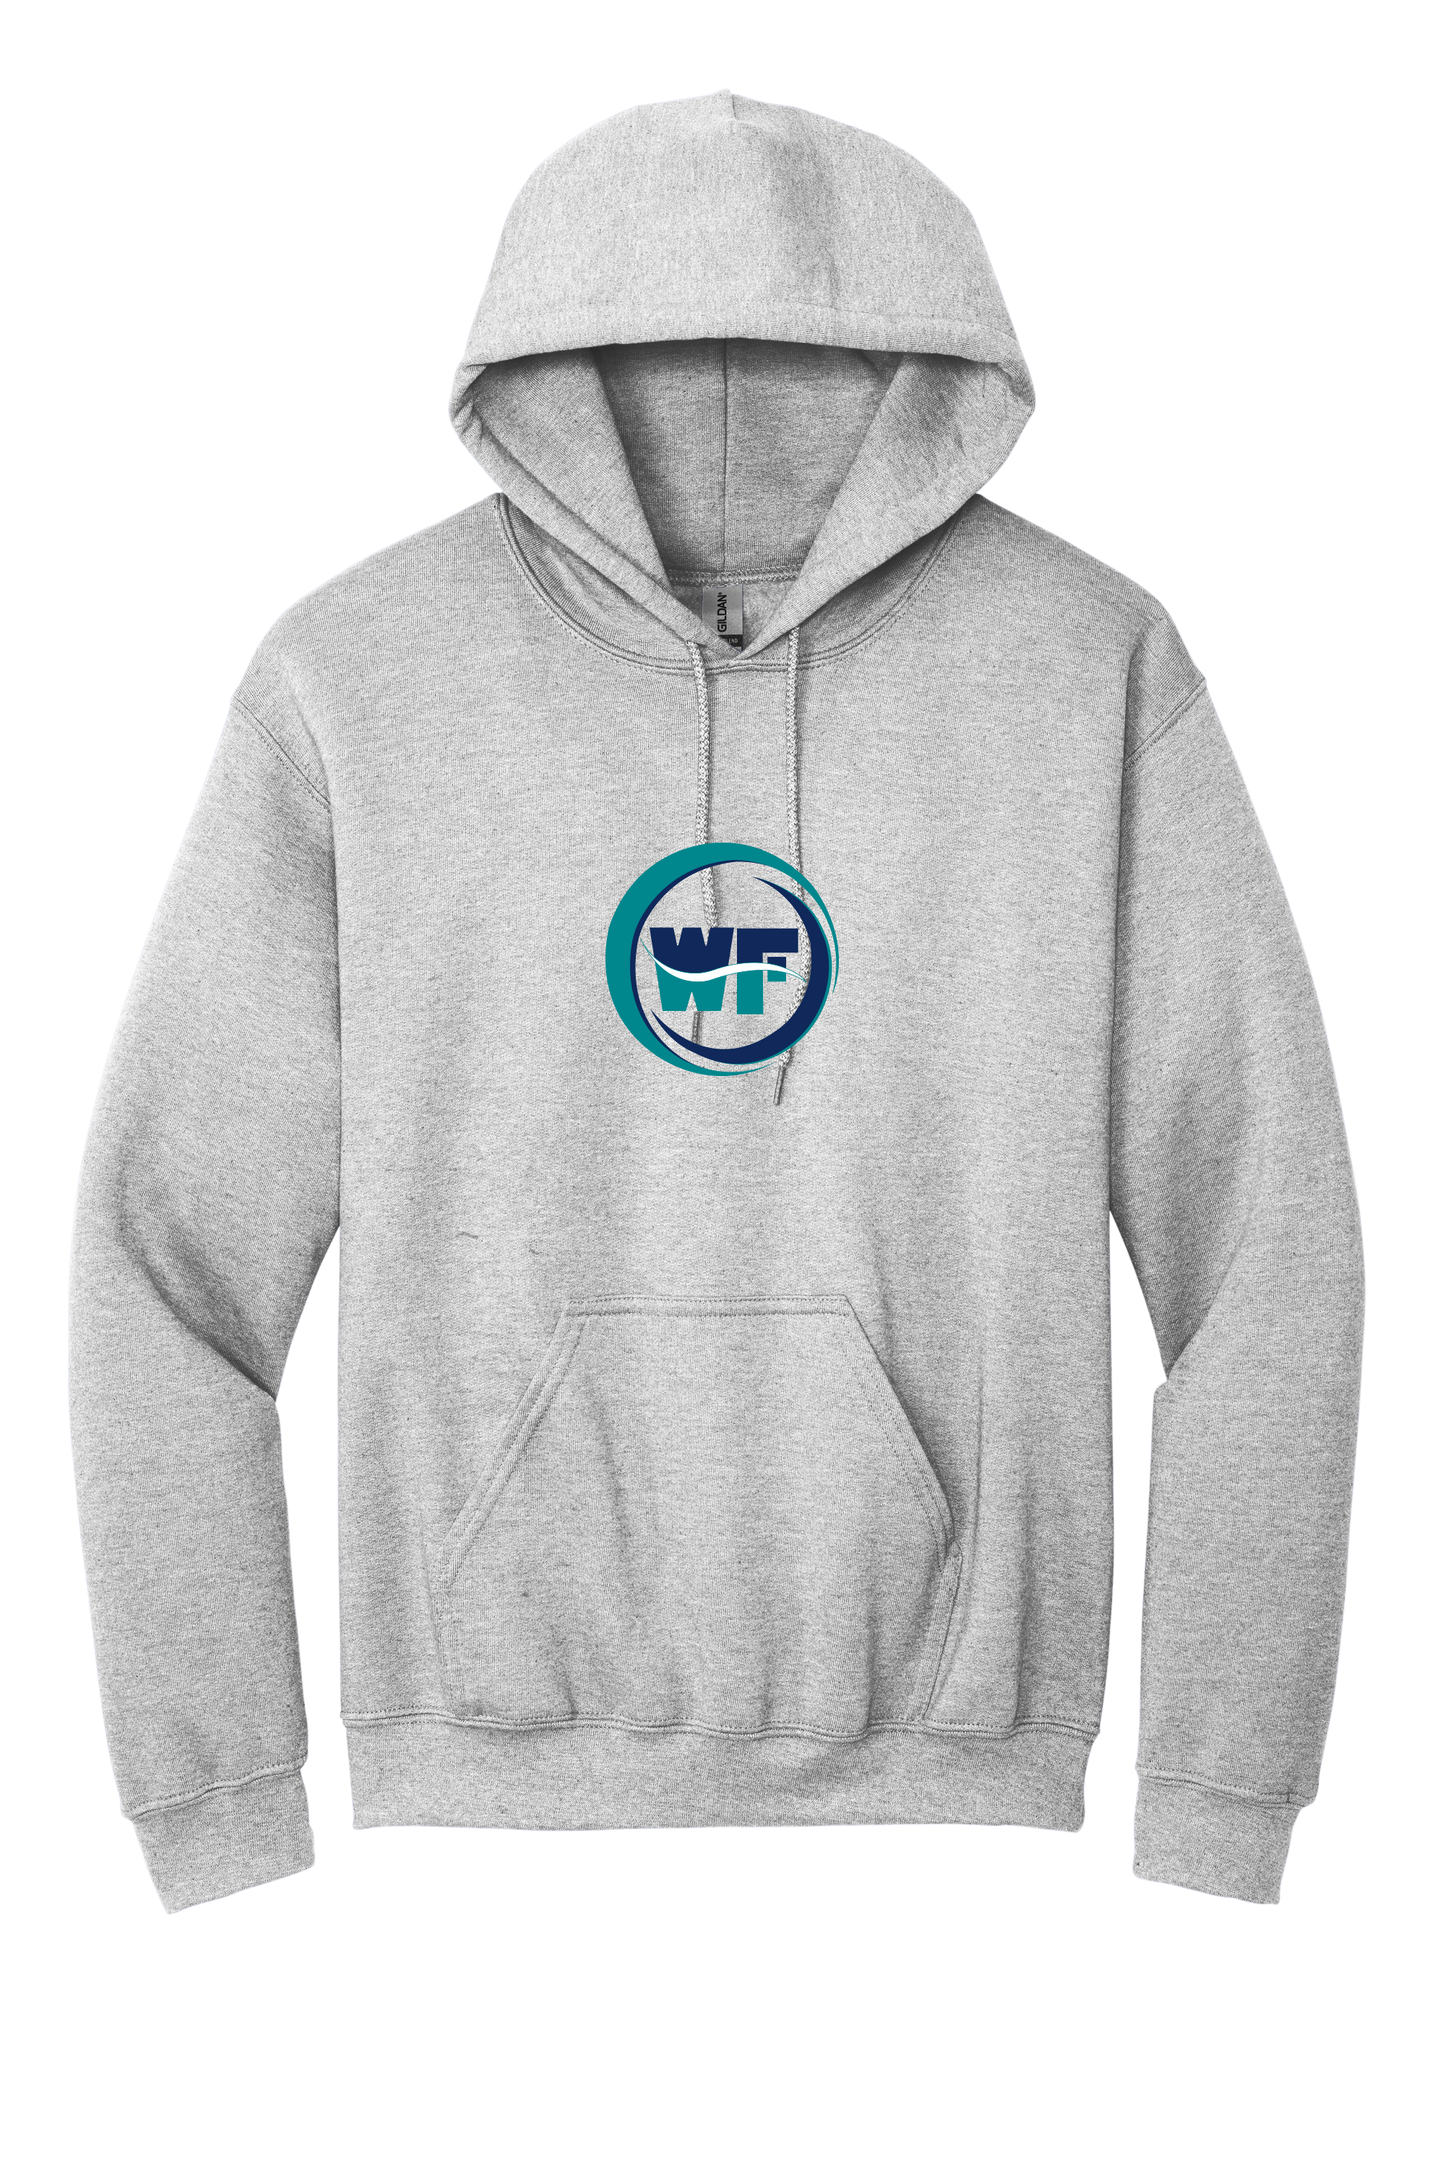 WF Hooded Sweatshirt (Ash Grey)